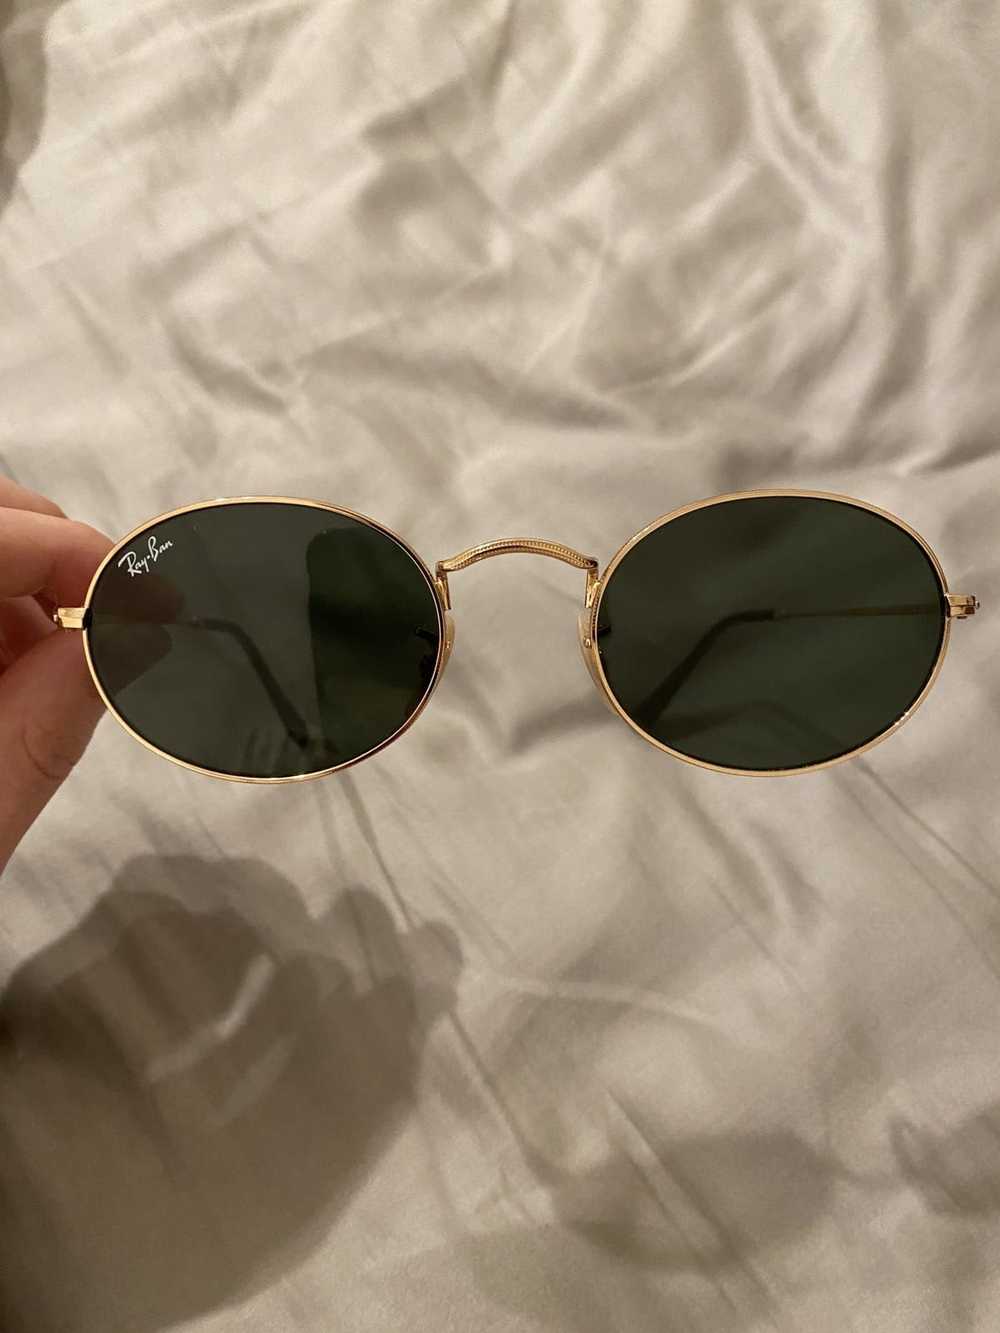 RayBan Ray Ban Gold Flat Oval Sunglasses - image 1